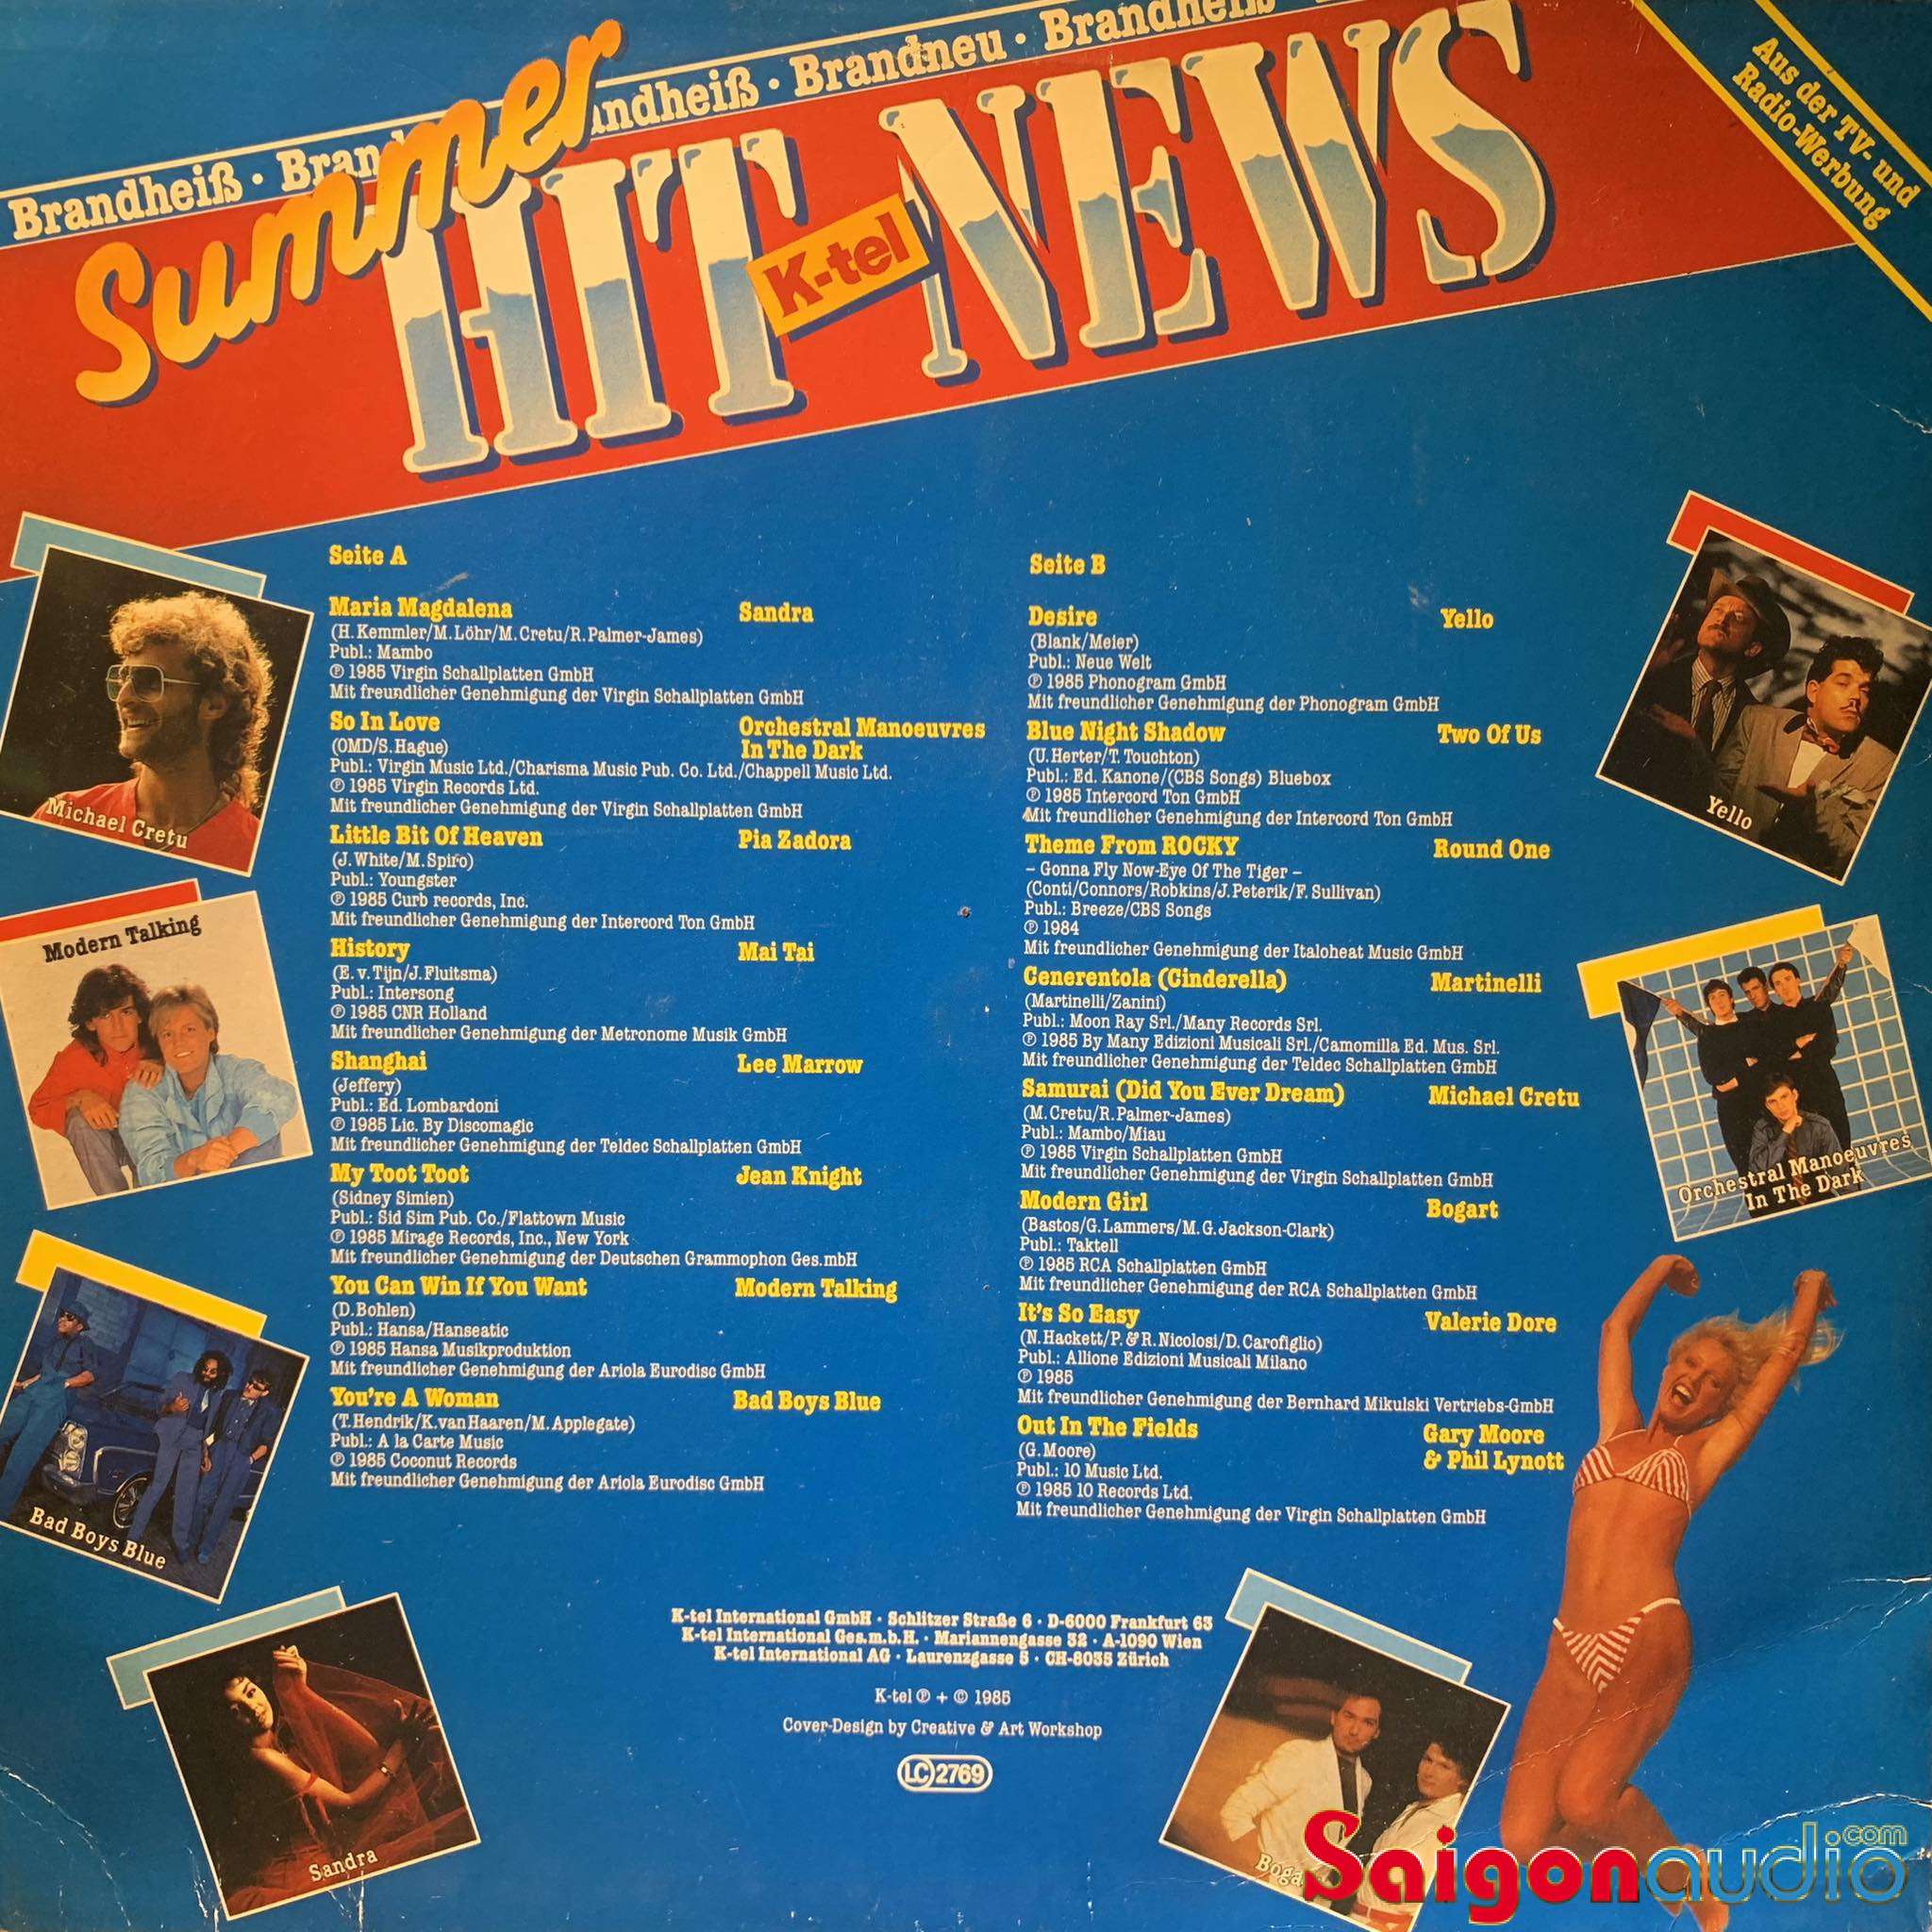 Đĩa than Summer Hit News w Modern Talking Bad Boys Blue Gary Moore 1985 | LP Vinyl Records